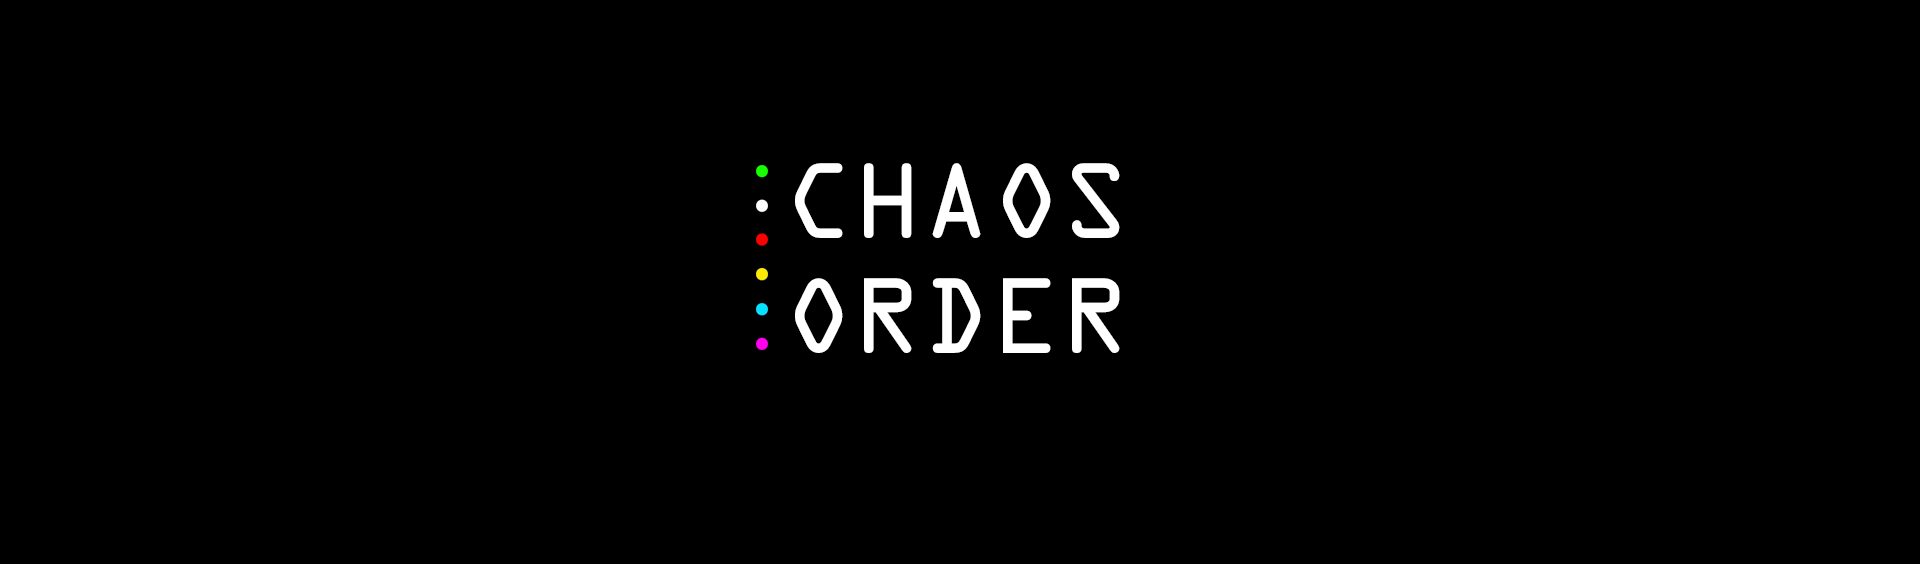 Chaos/Order